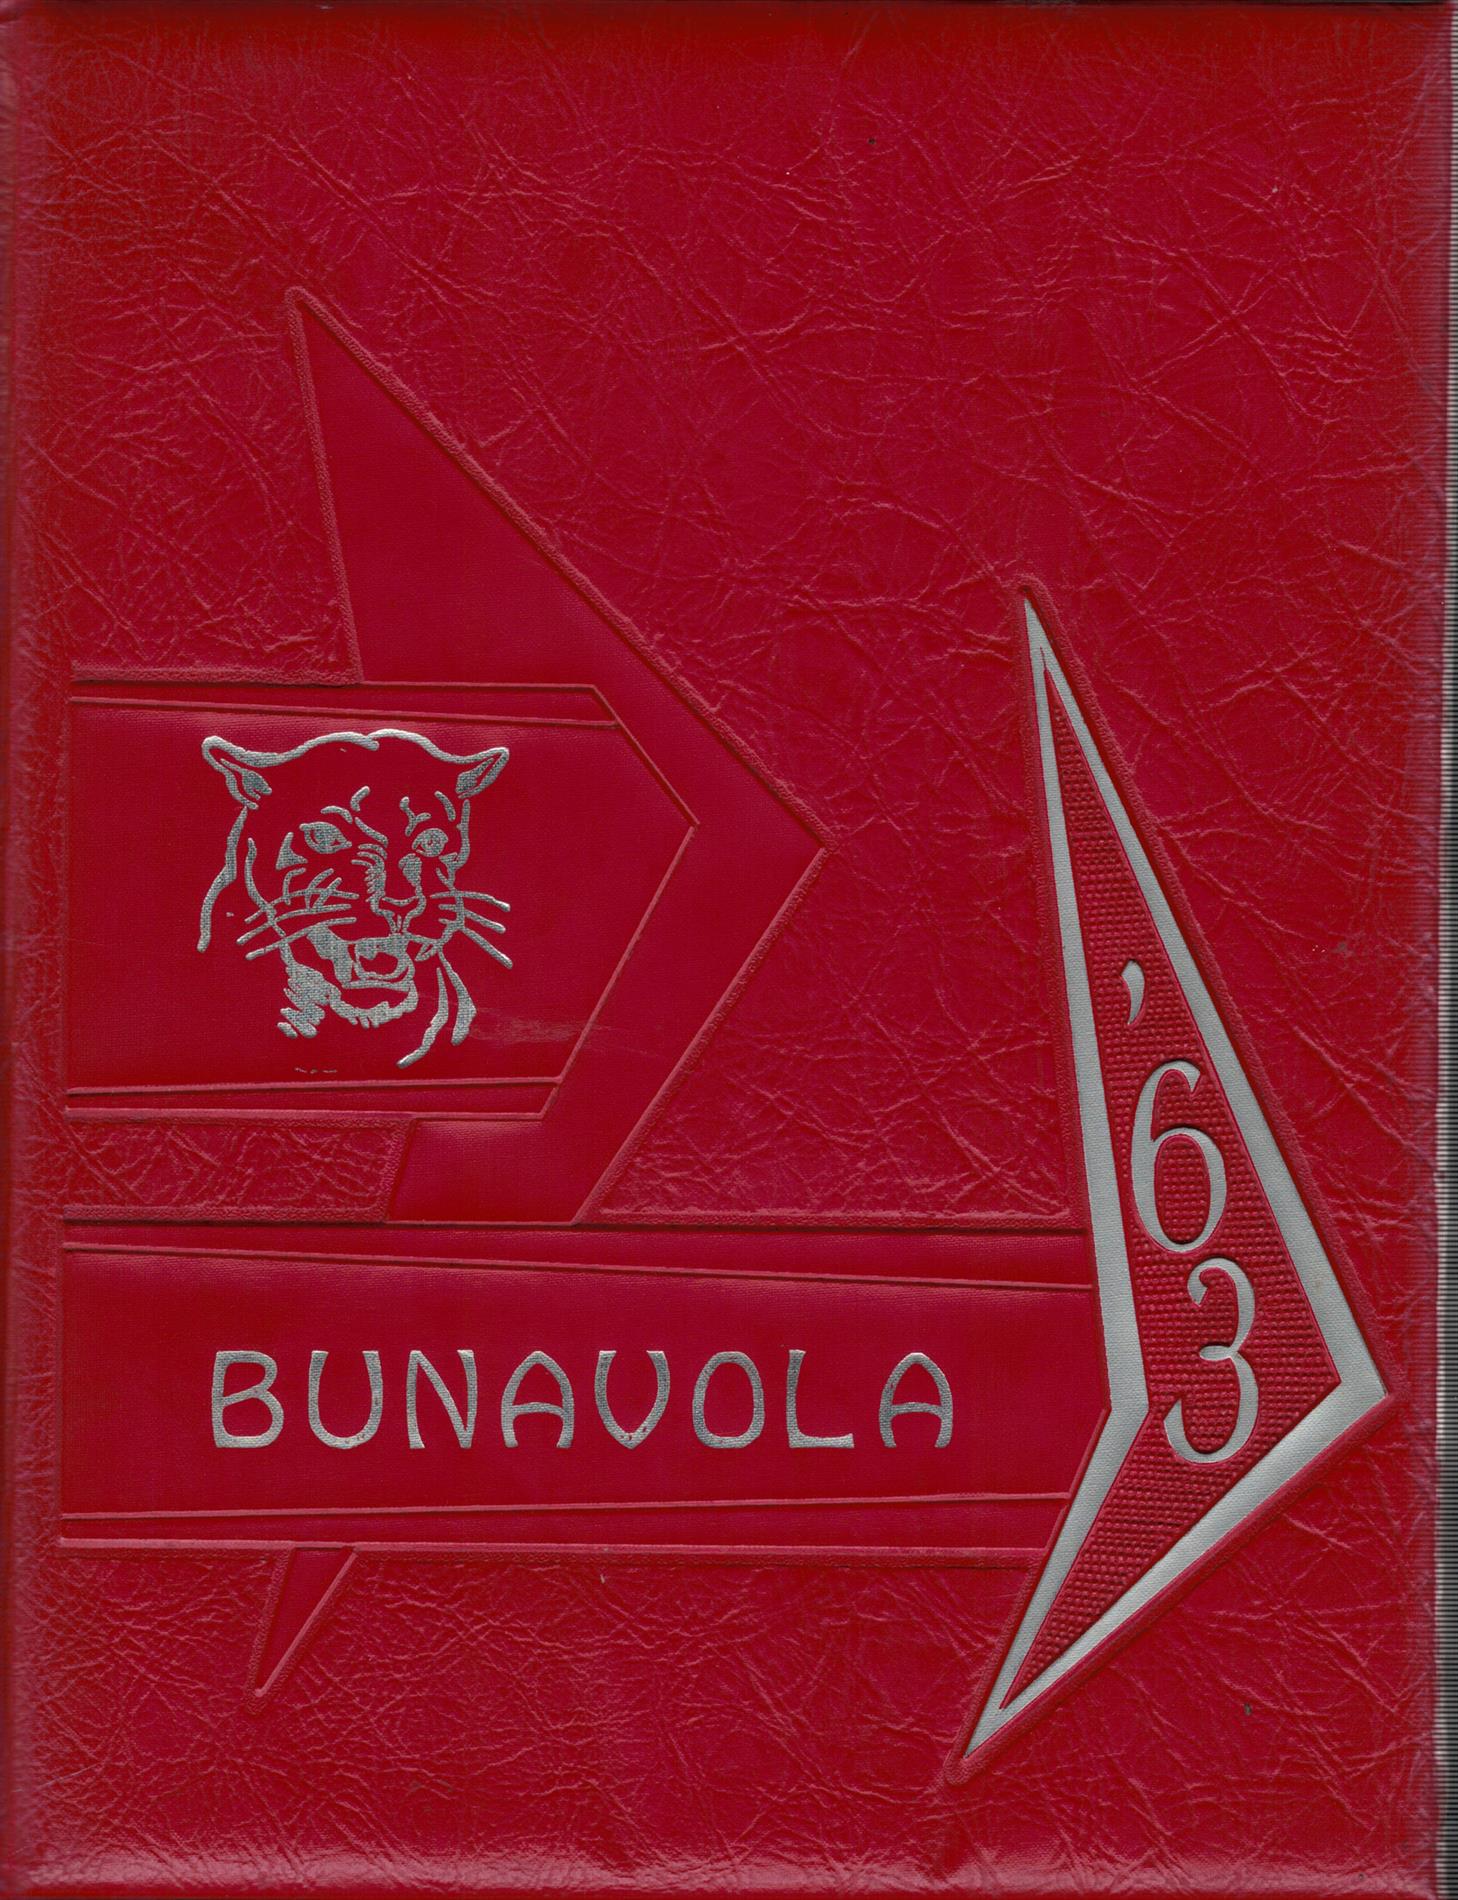 1963 Bunavola